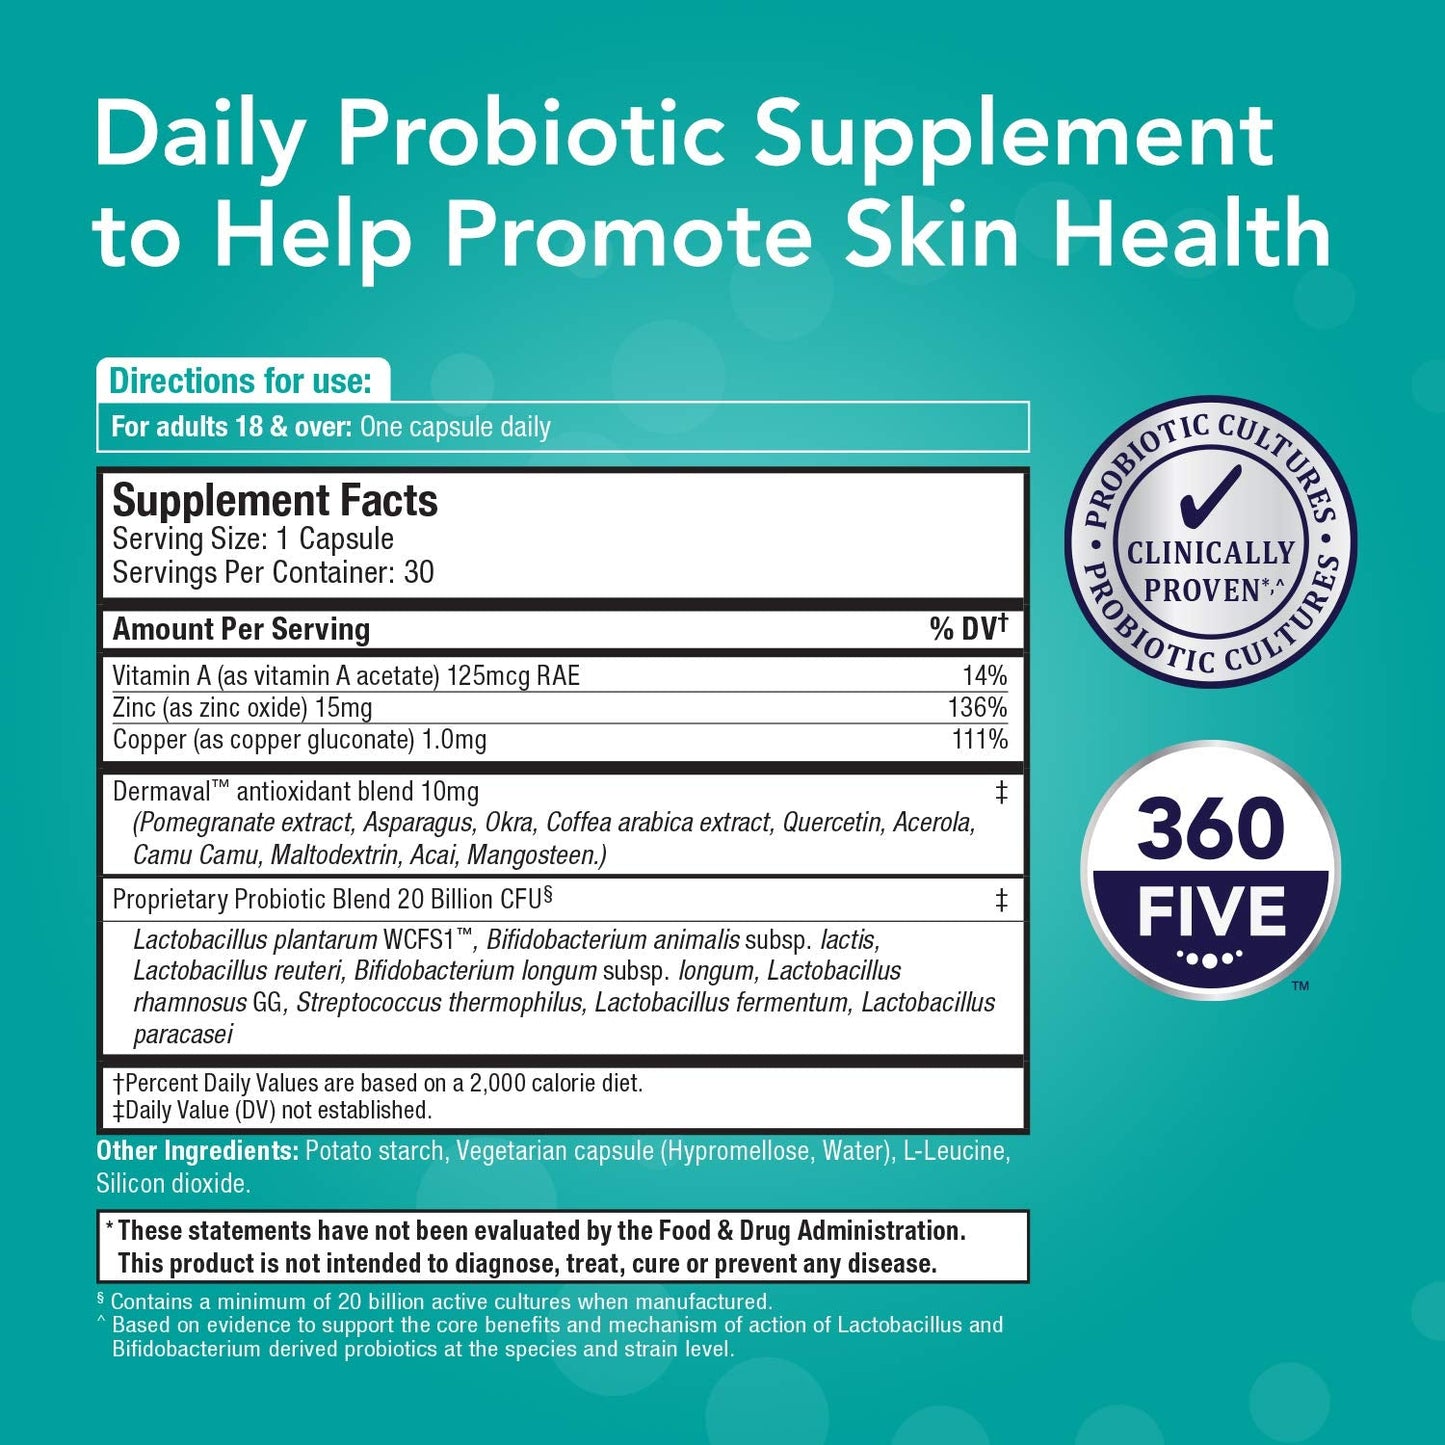 Bio360 Probiotics Skin Health Formula, 30 Vegetarian Capsules